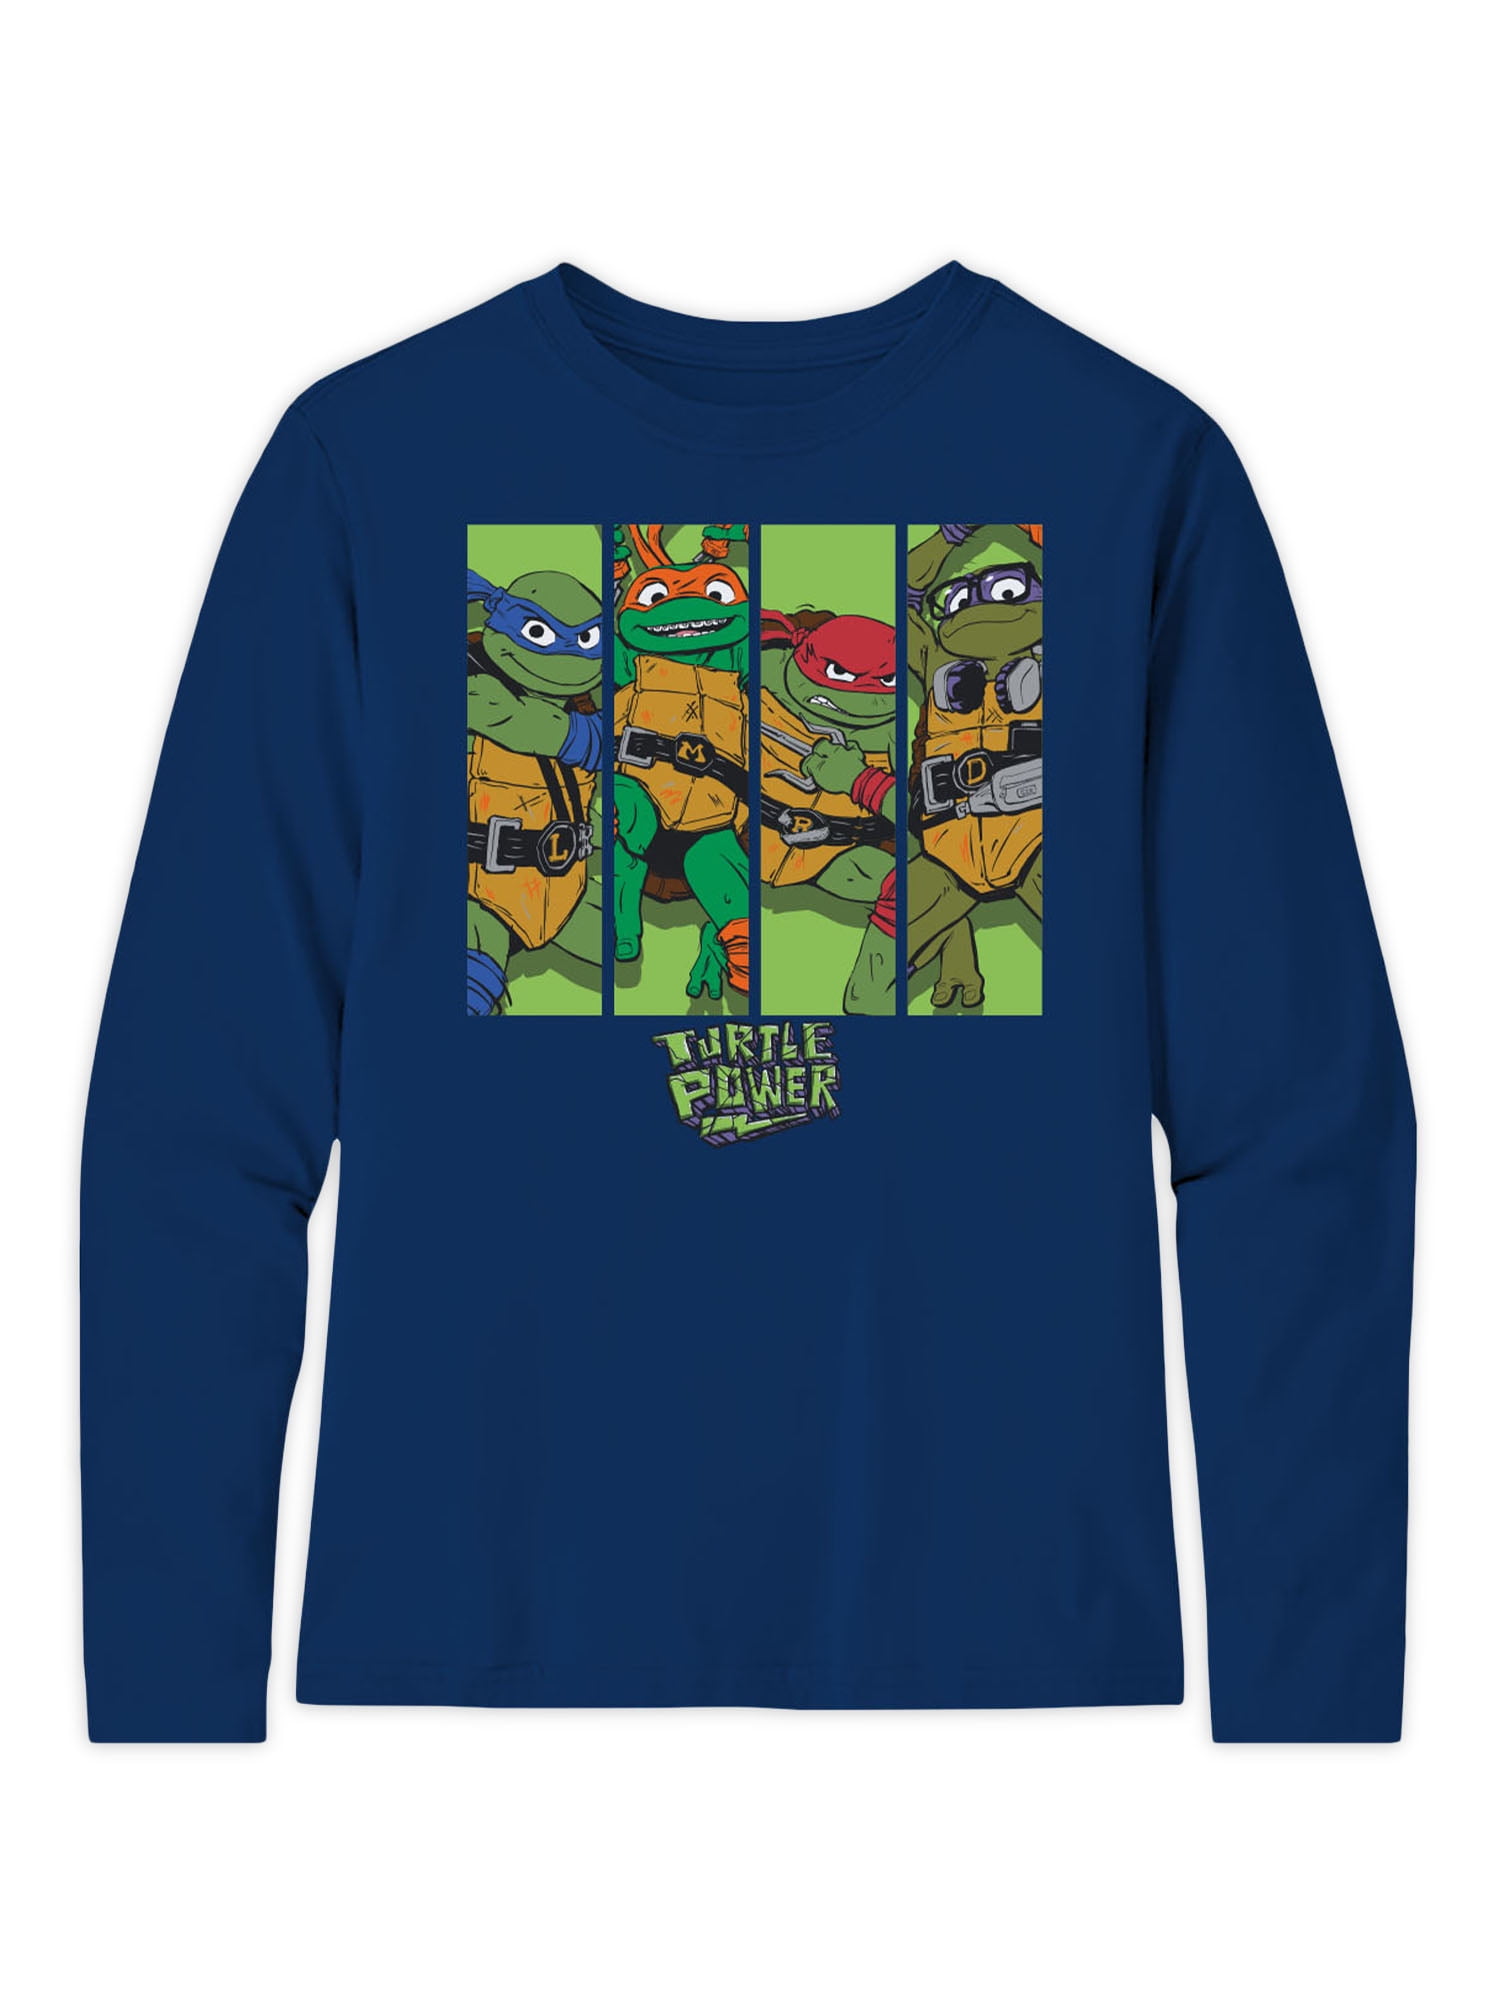 Boys 8-20 Teenage Mutant Ninja Turtles Defenders Inc. Graphic Tee, Boy's, Size: Small, Dark Grey